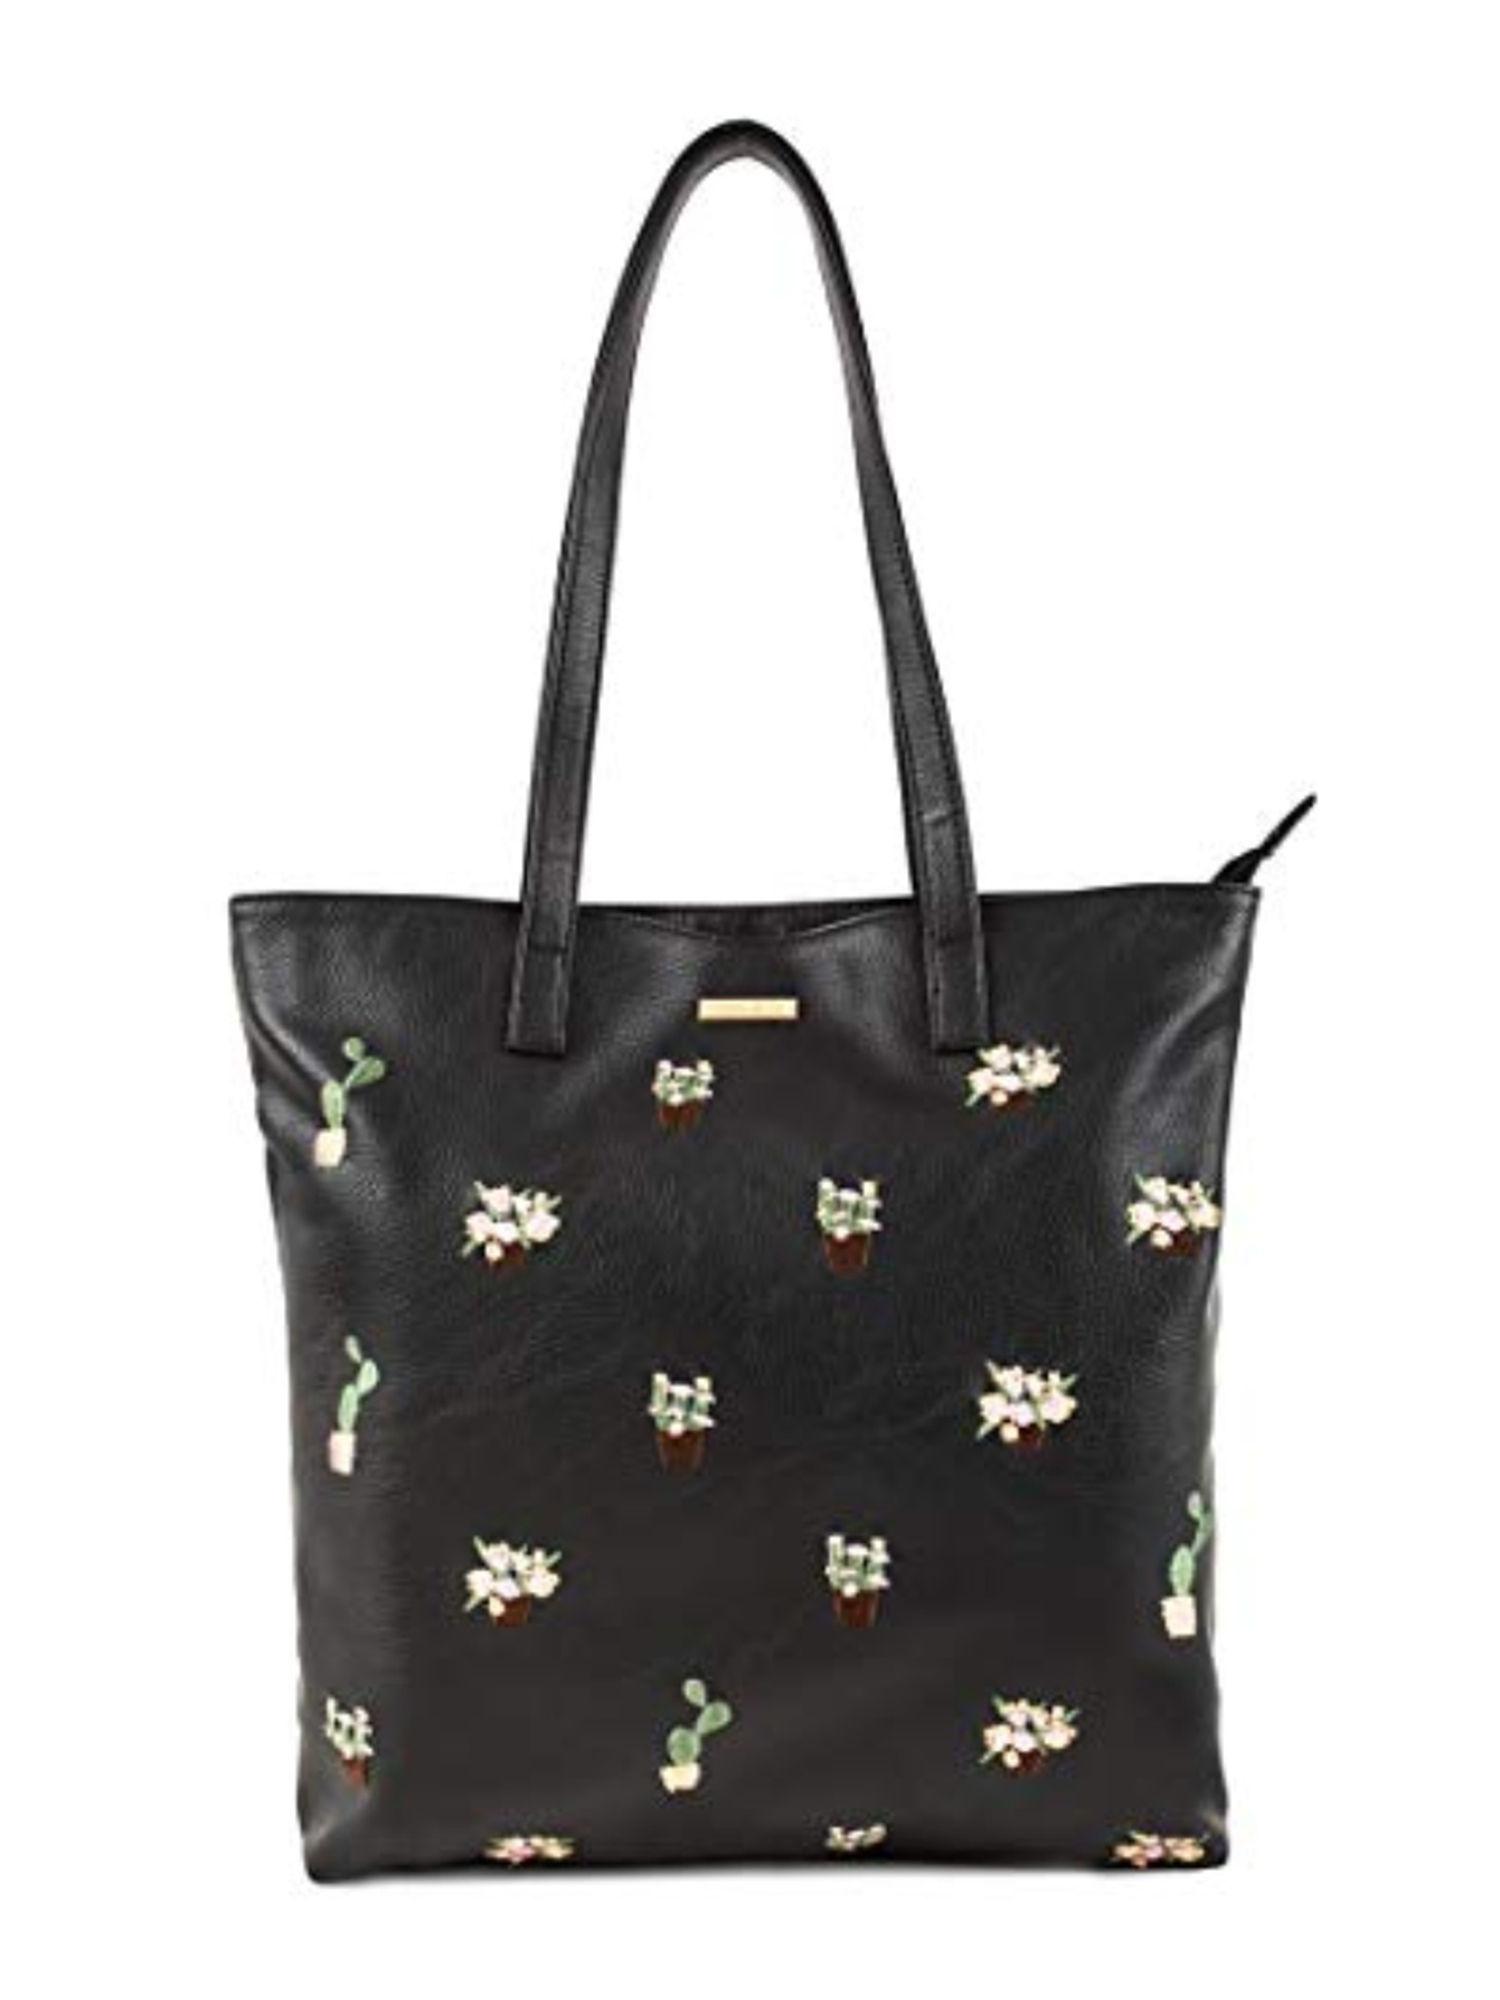 black floral tote bag